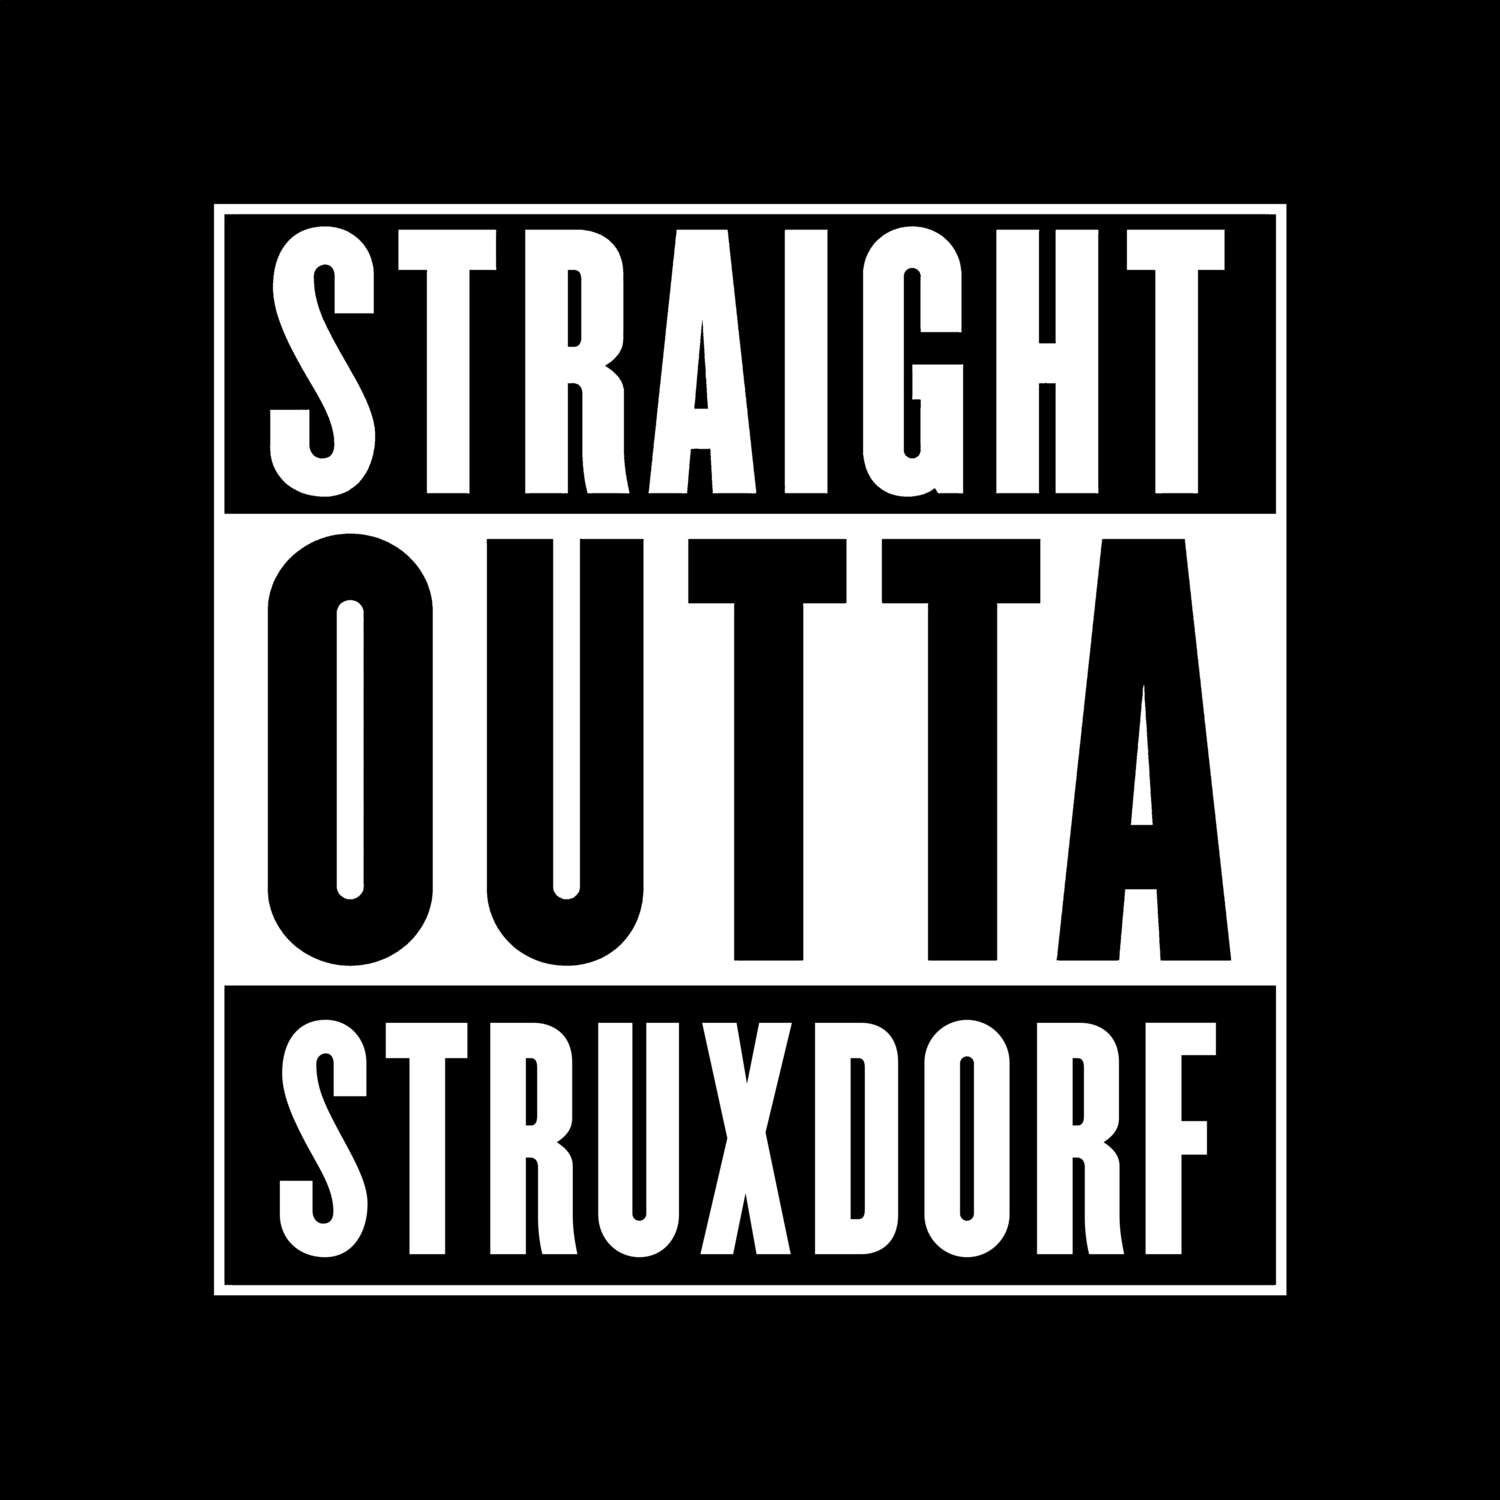 Struxdorf T-Shirt »Straight Outta«